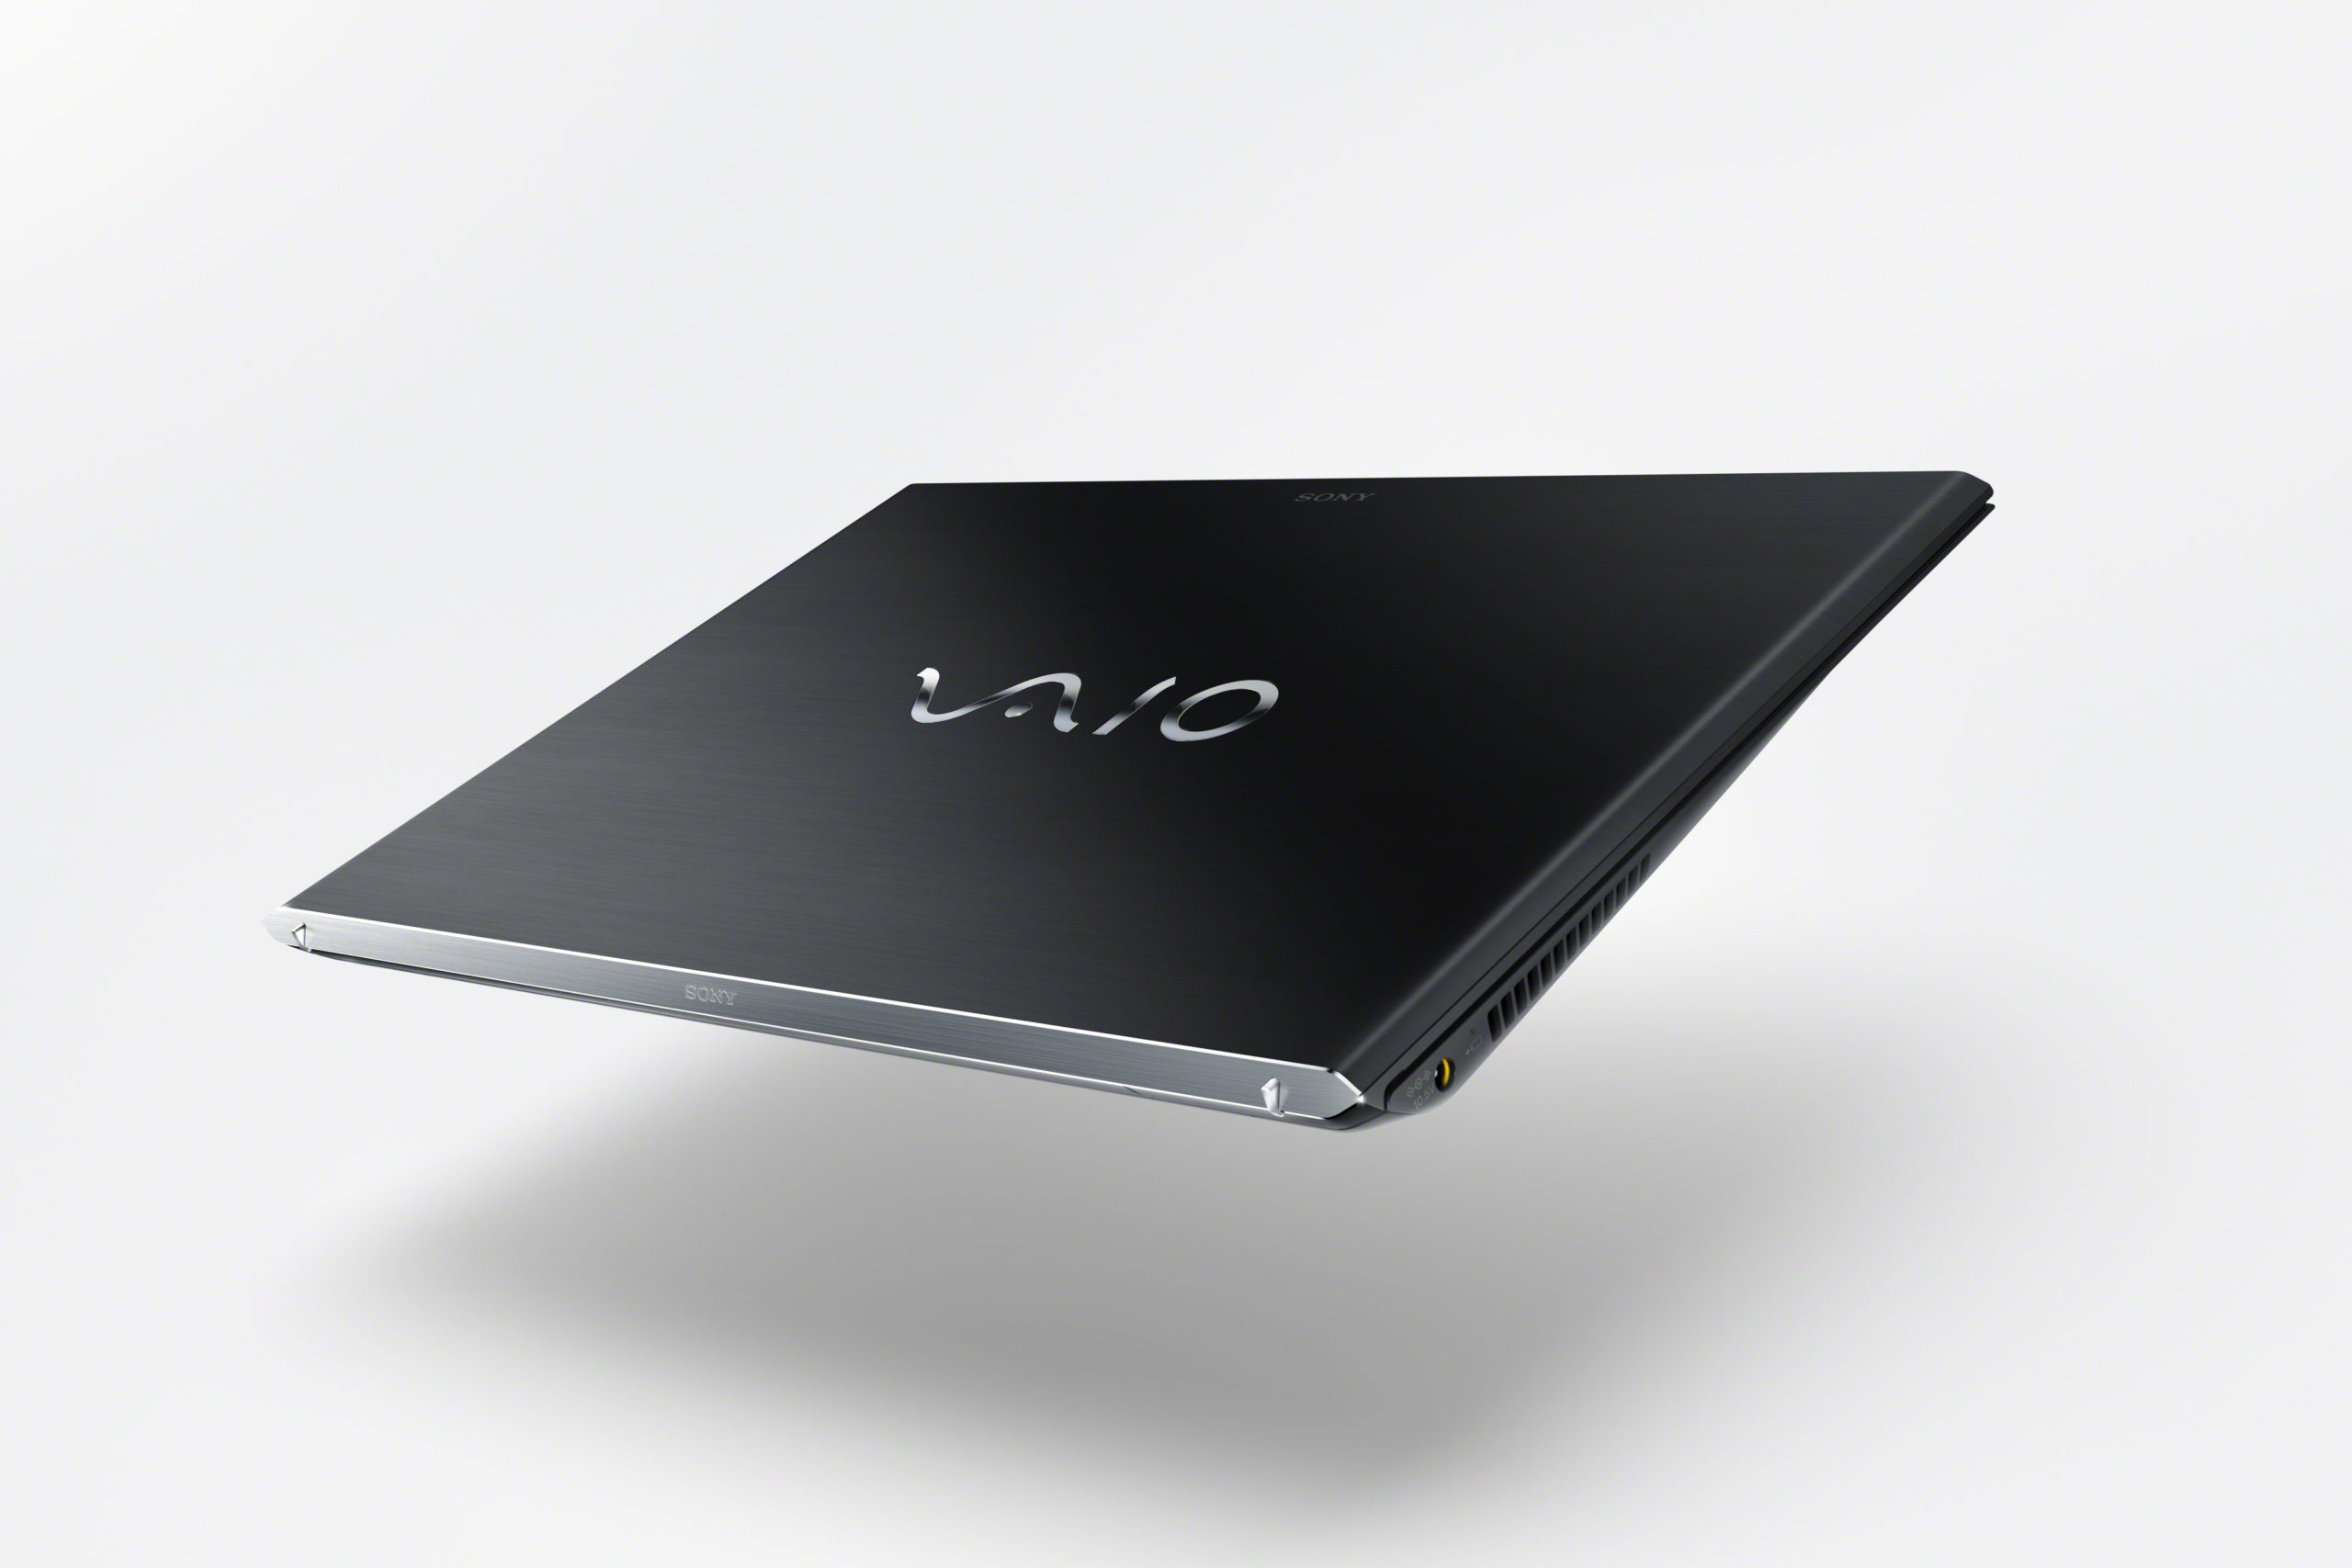 Sony Vaio Pro: Sony Is Finally Making Good Laptops Again